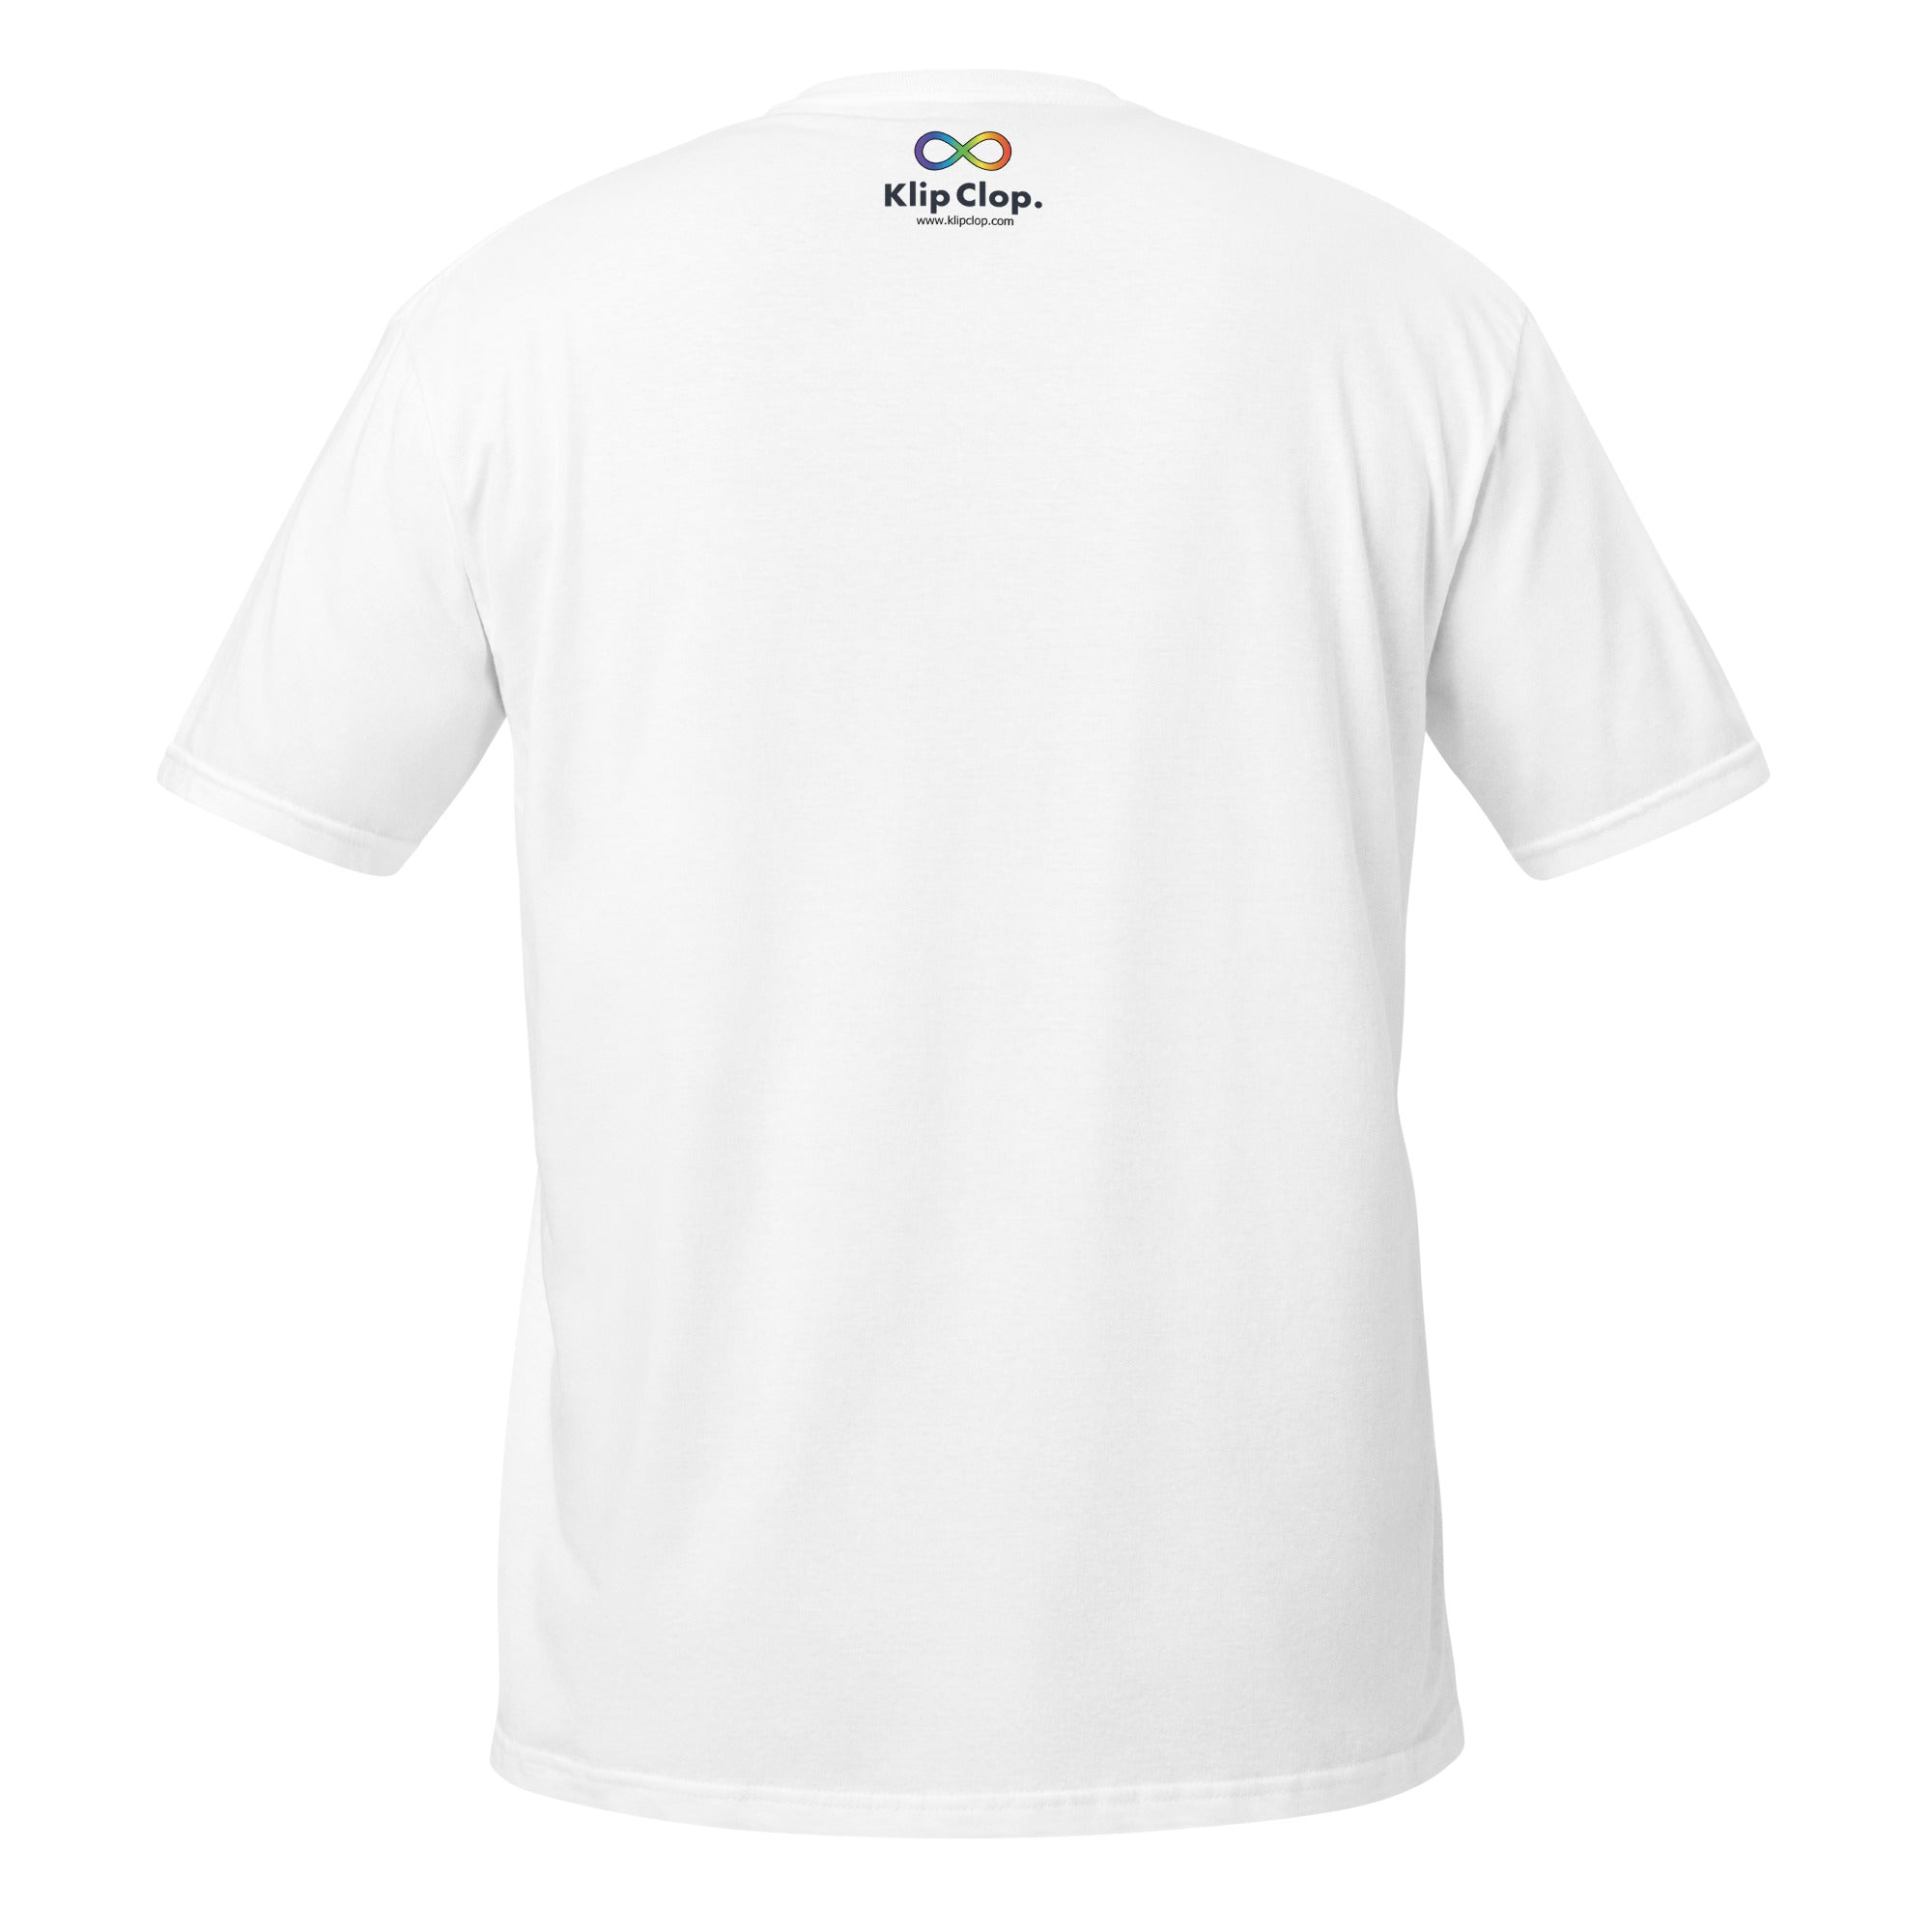 Short-Sleeve Unisex T-Shirt- ADHD- Embrace Neuro diversity